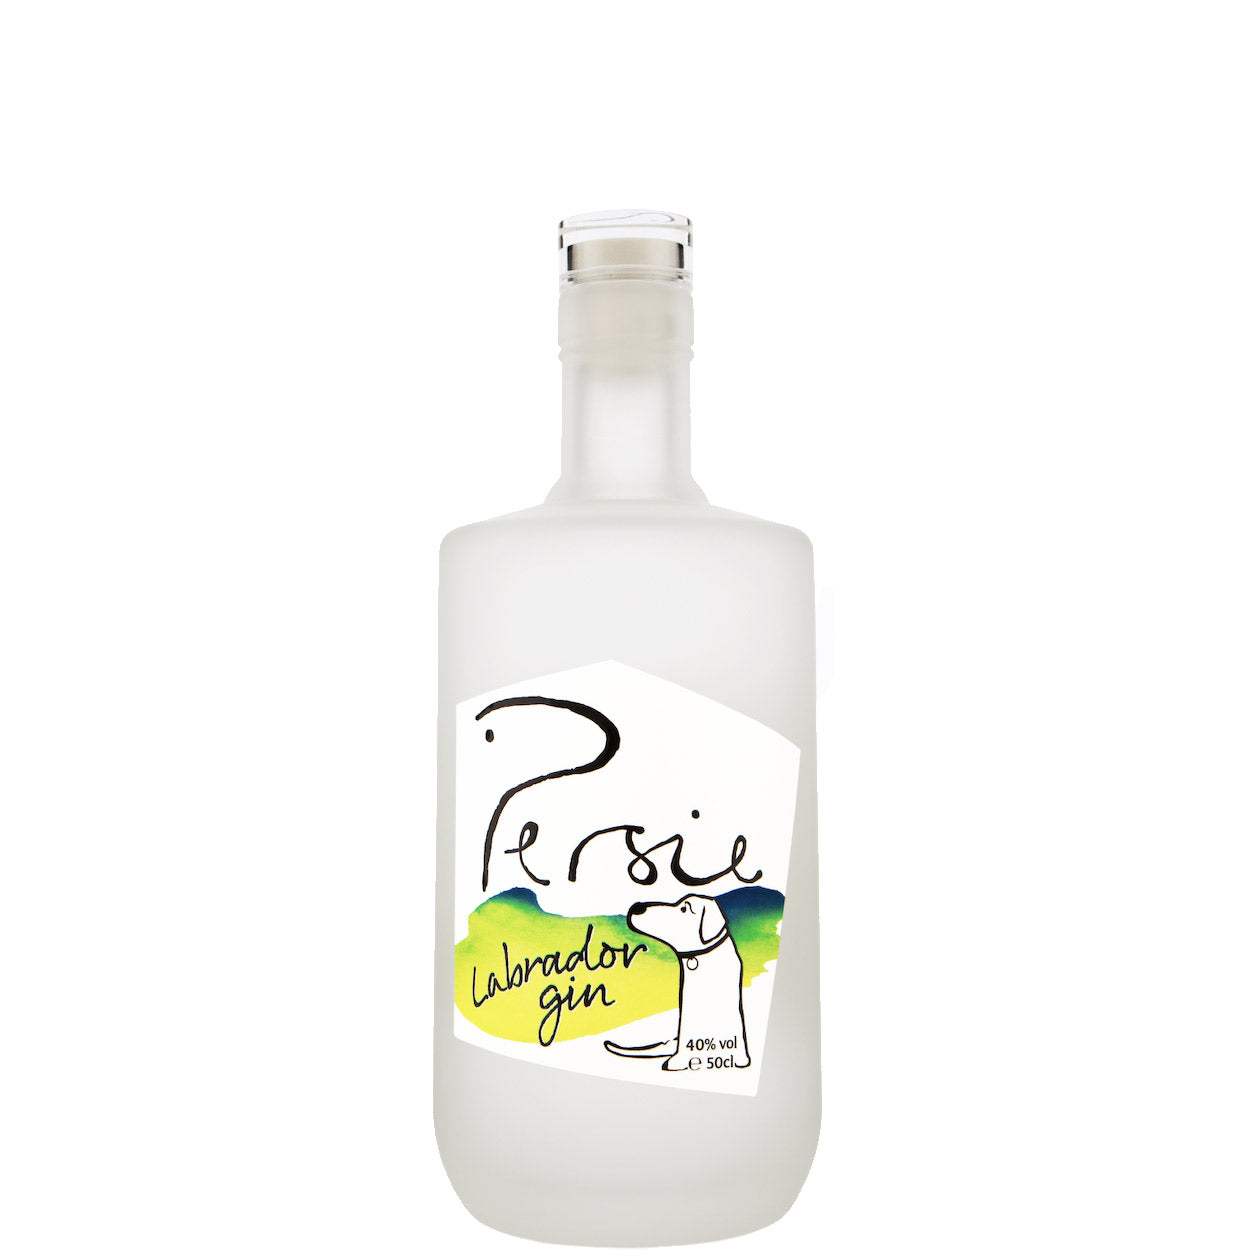 Persie Distillery, Labrador Gin, Nv - 50cl